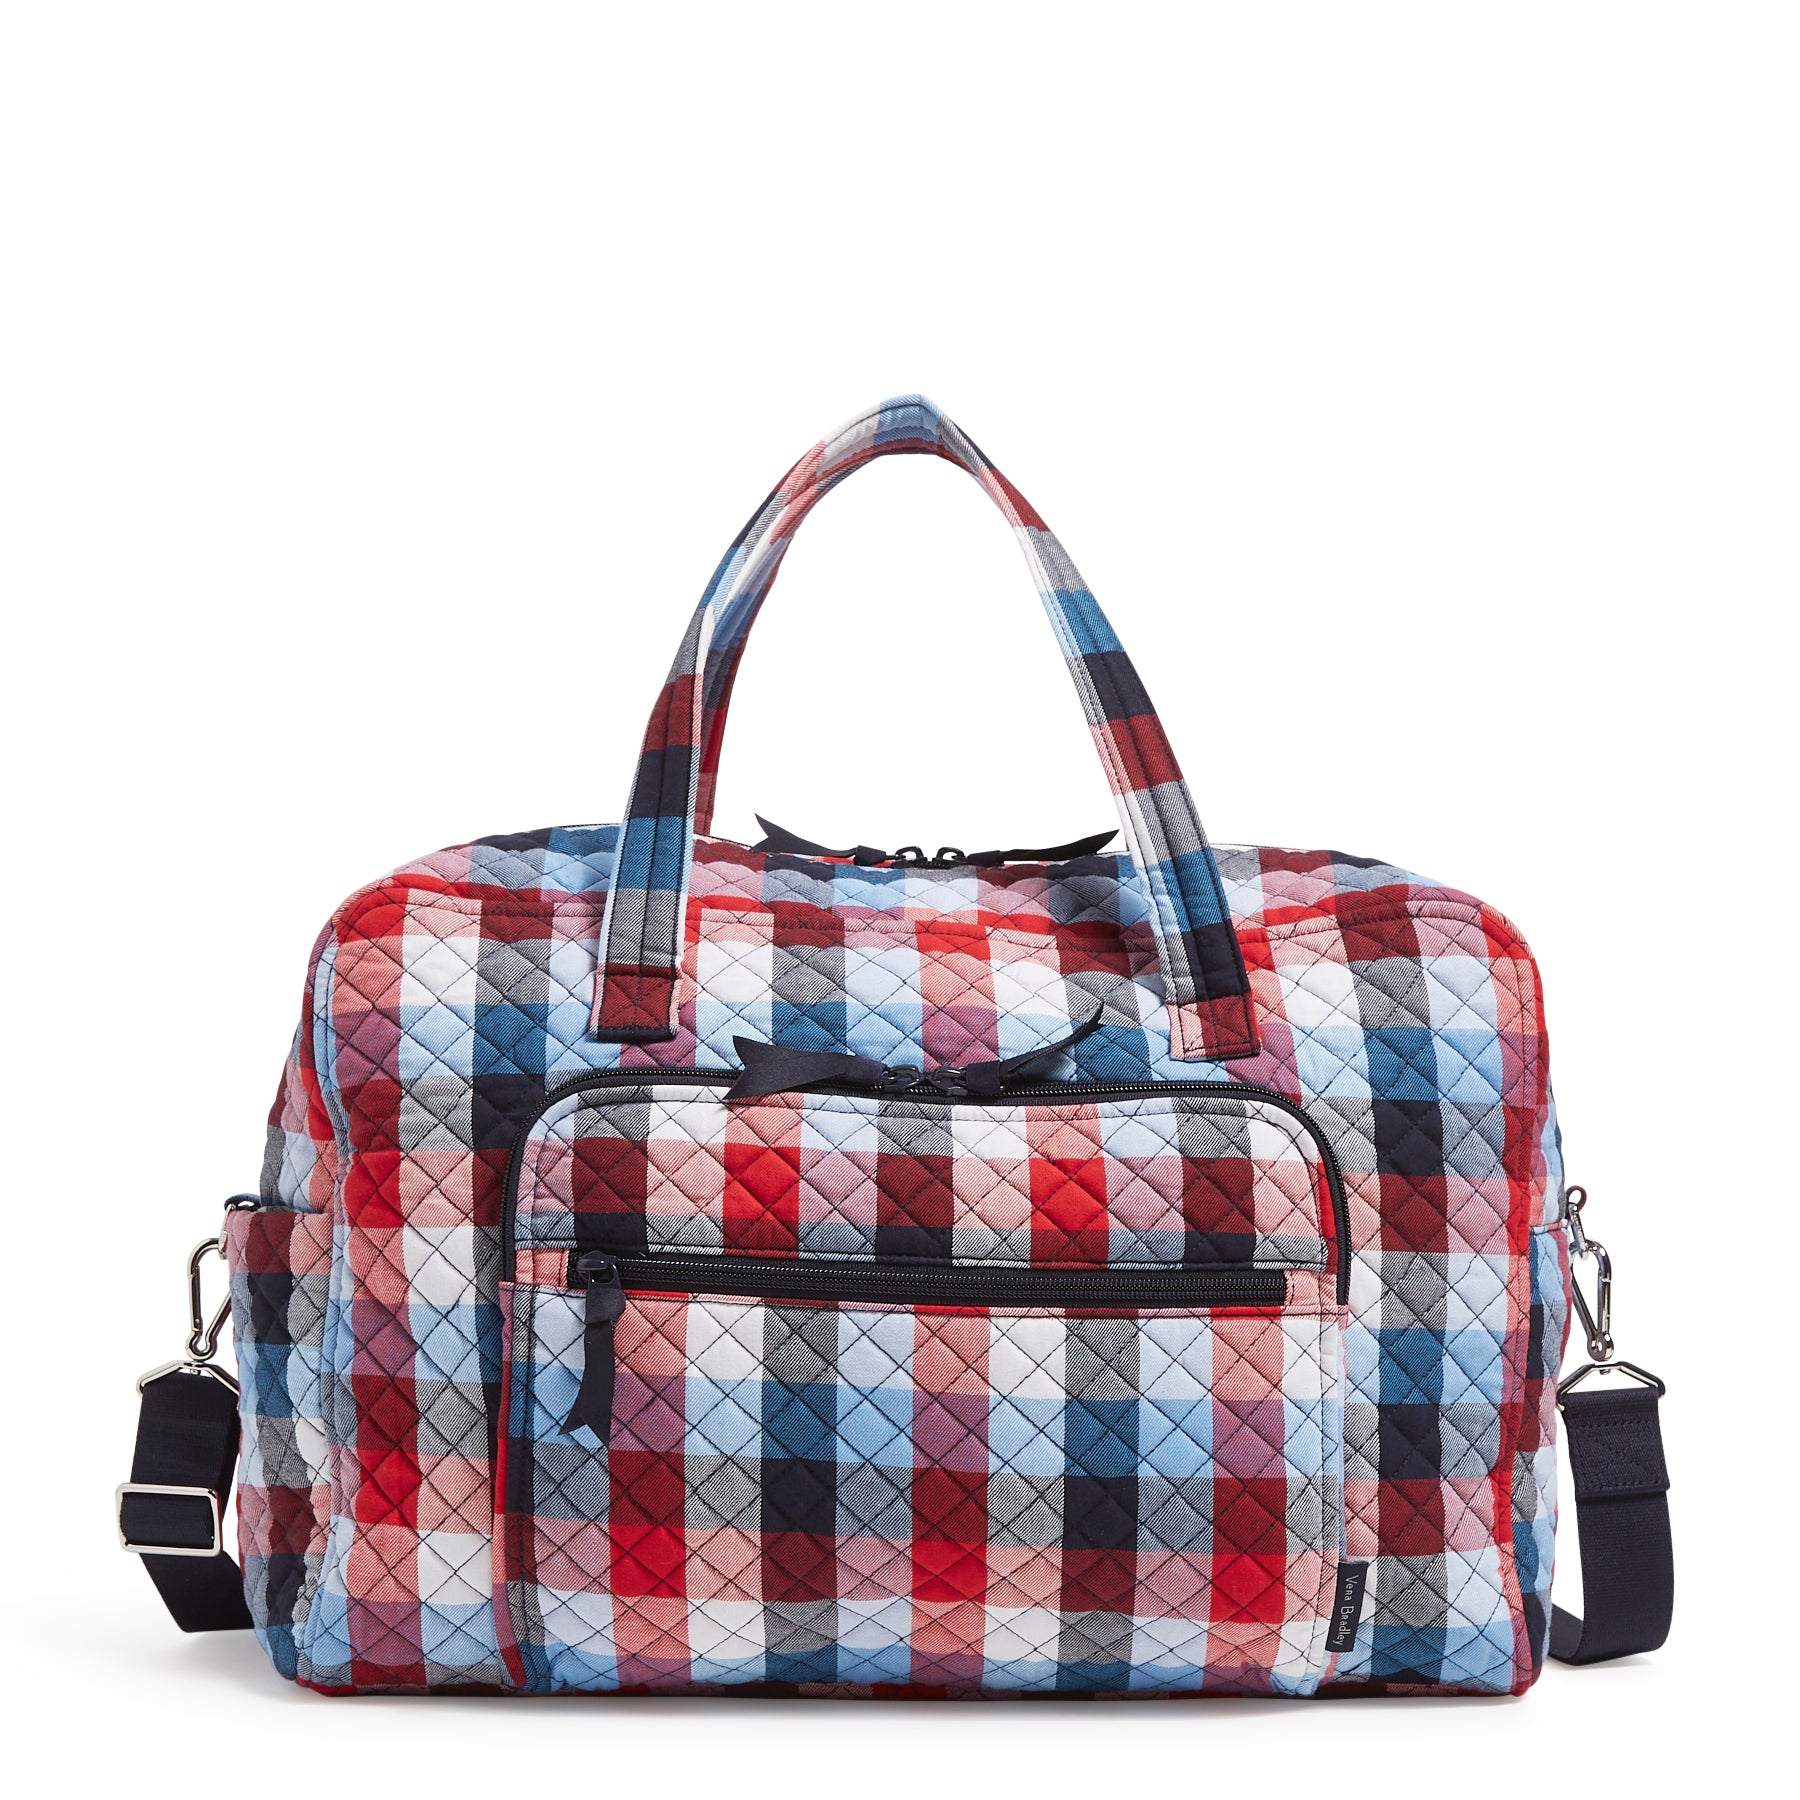 Duffle Bag - Checkered